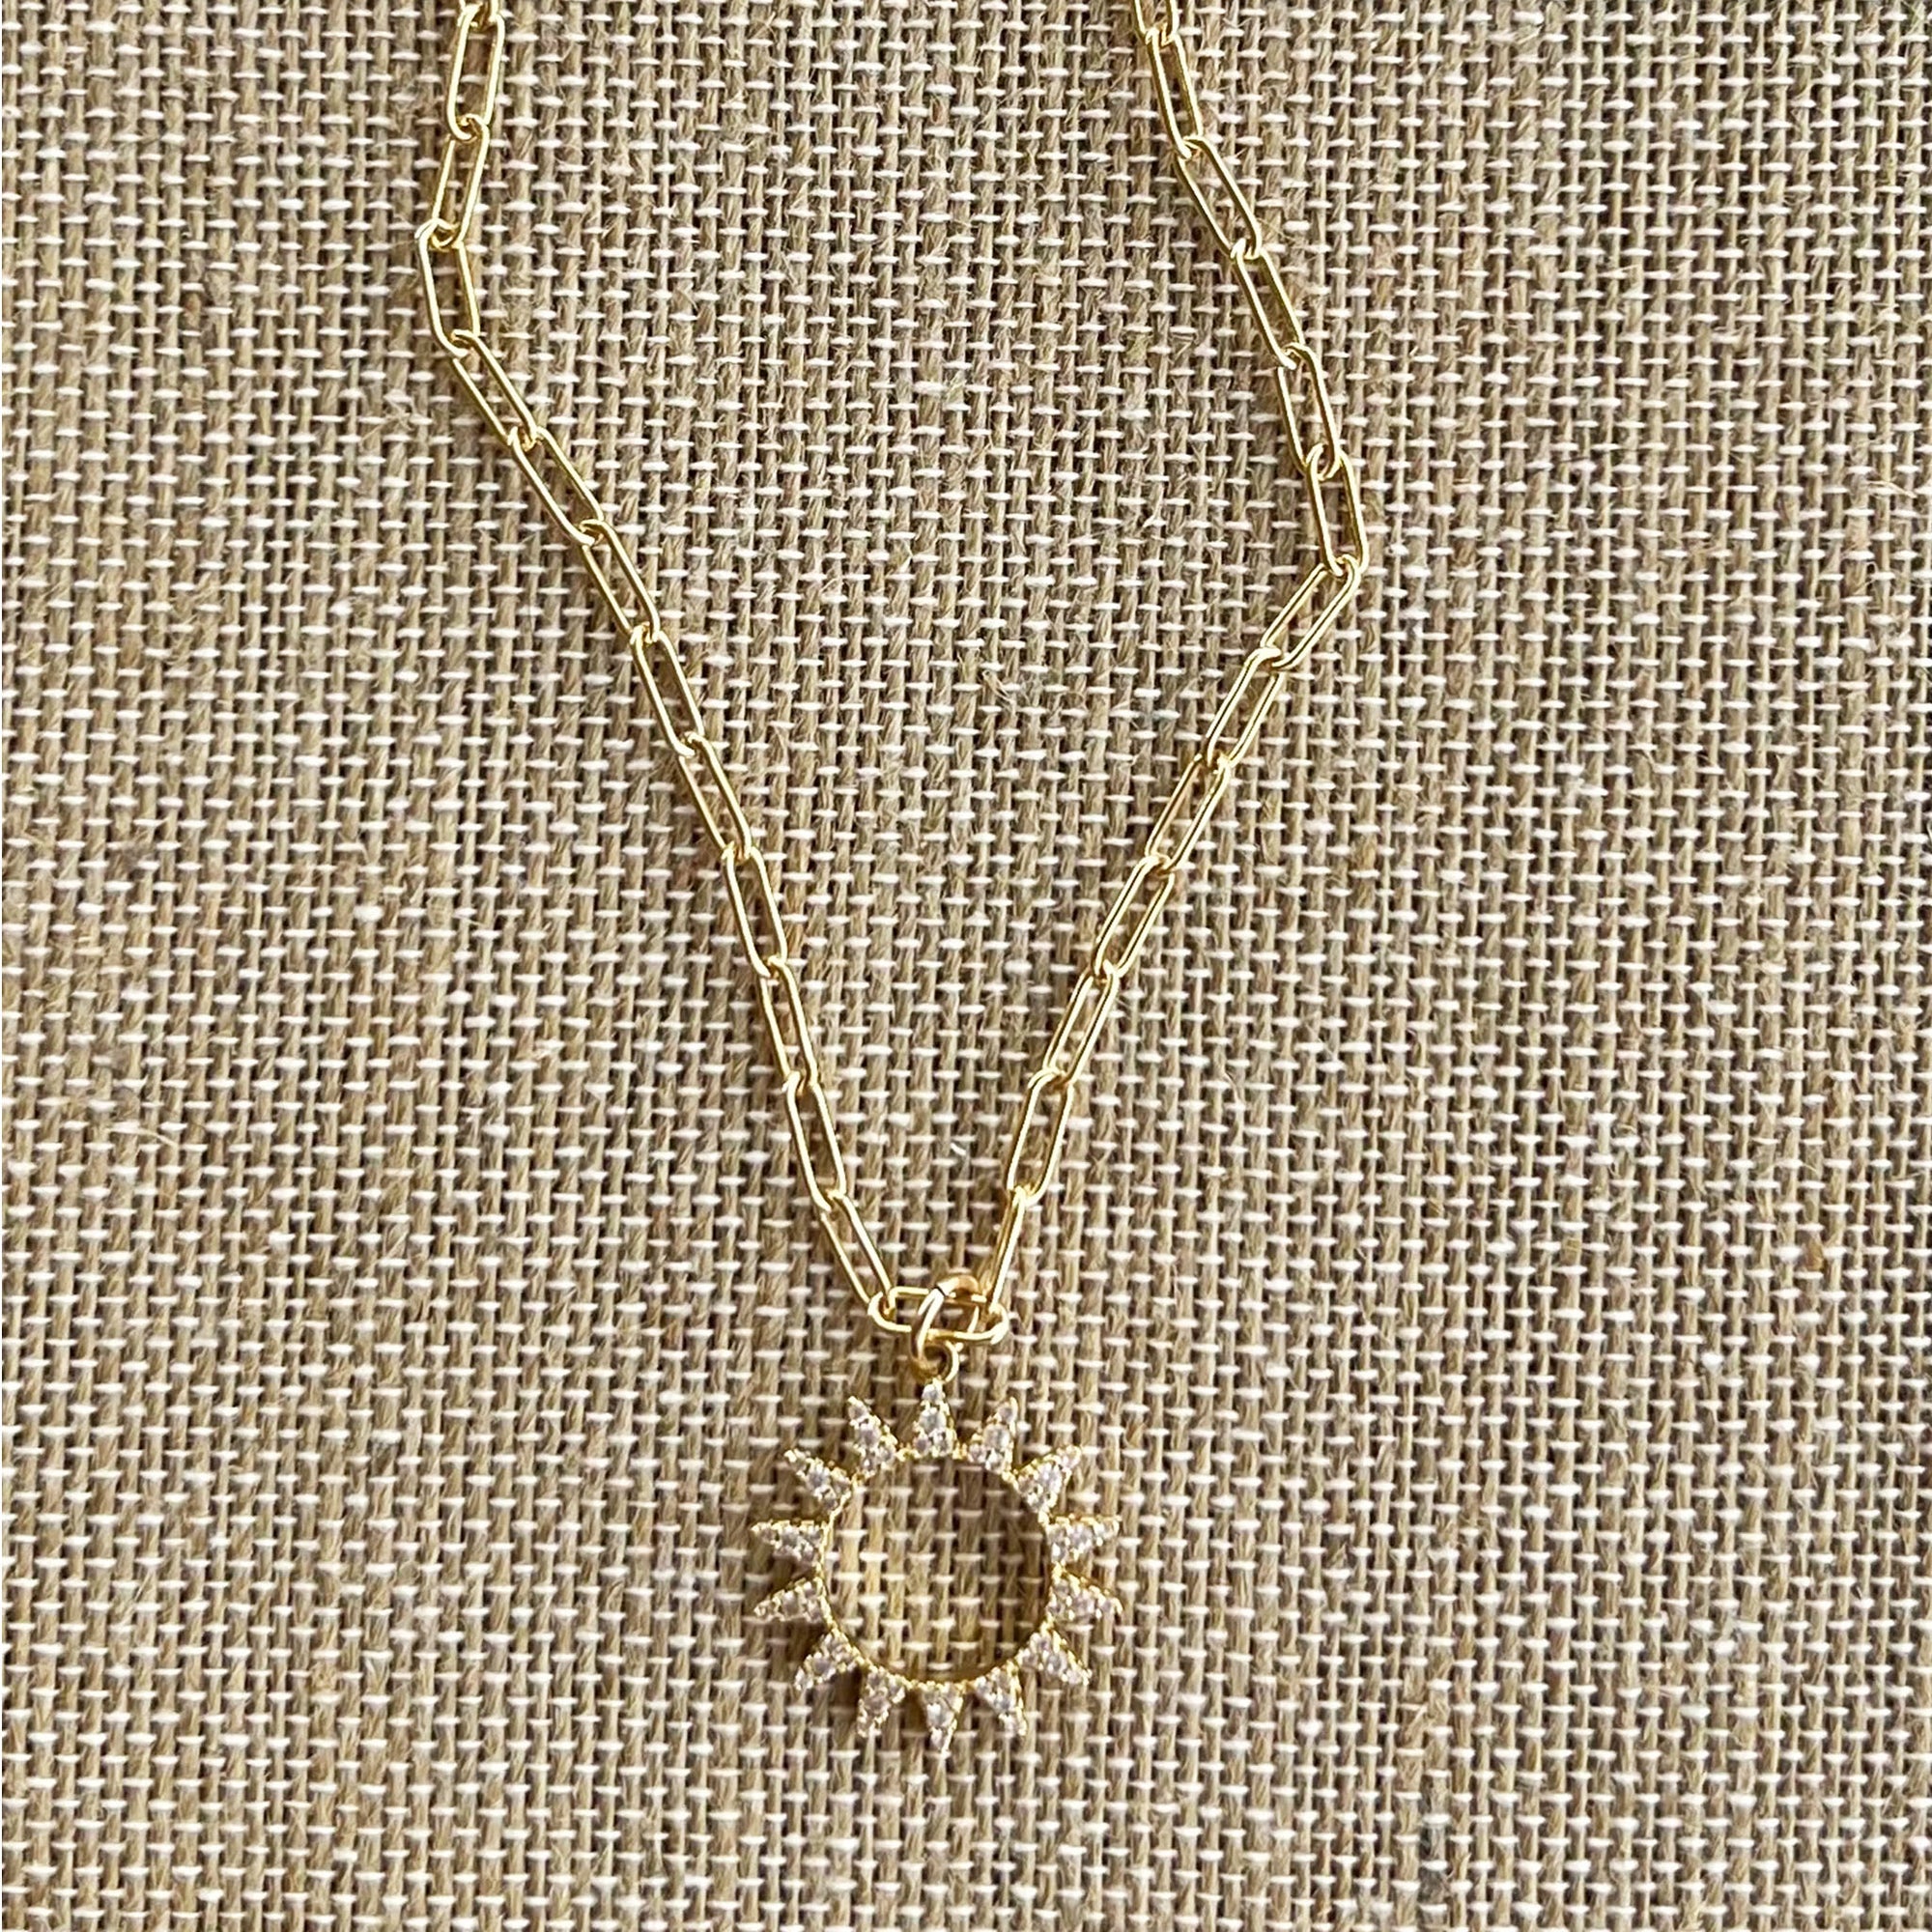 Shine Sun Paperclip Chain Necklace